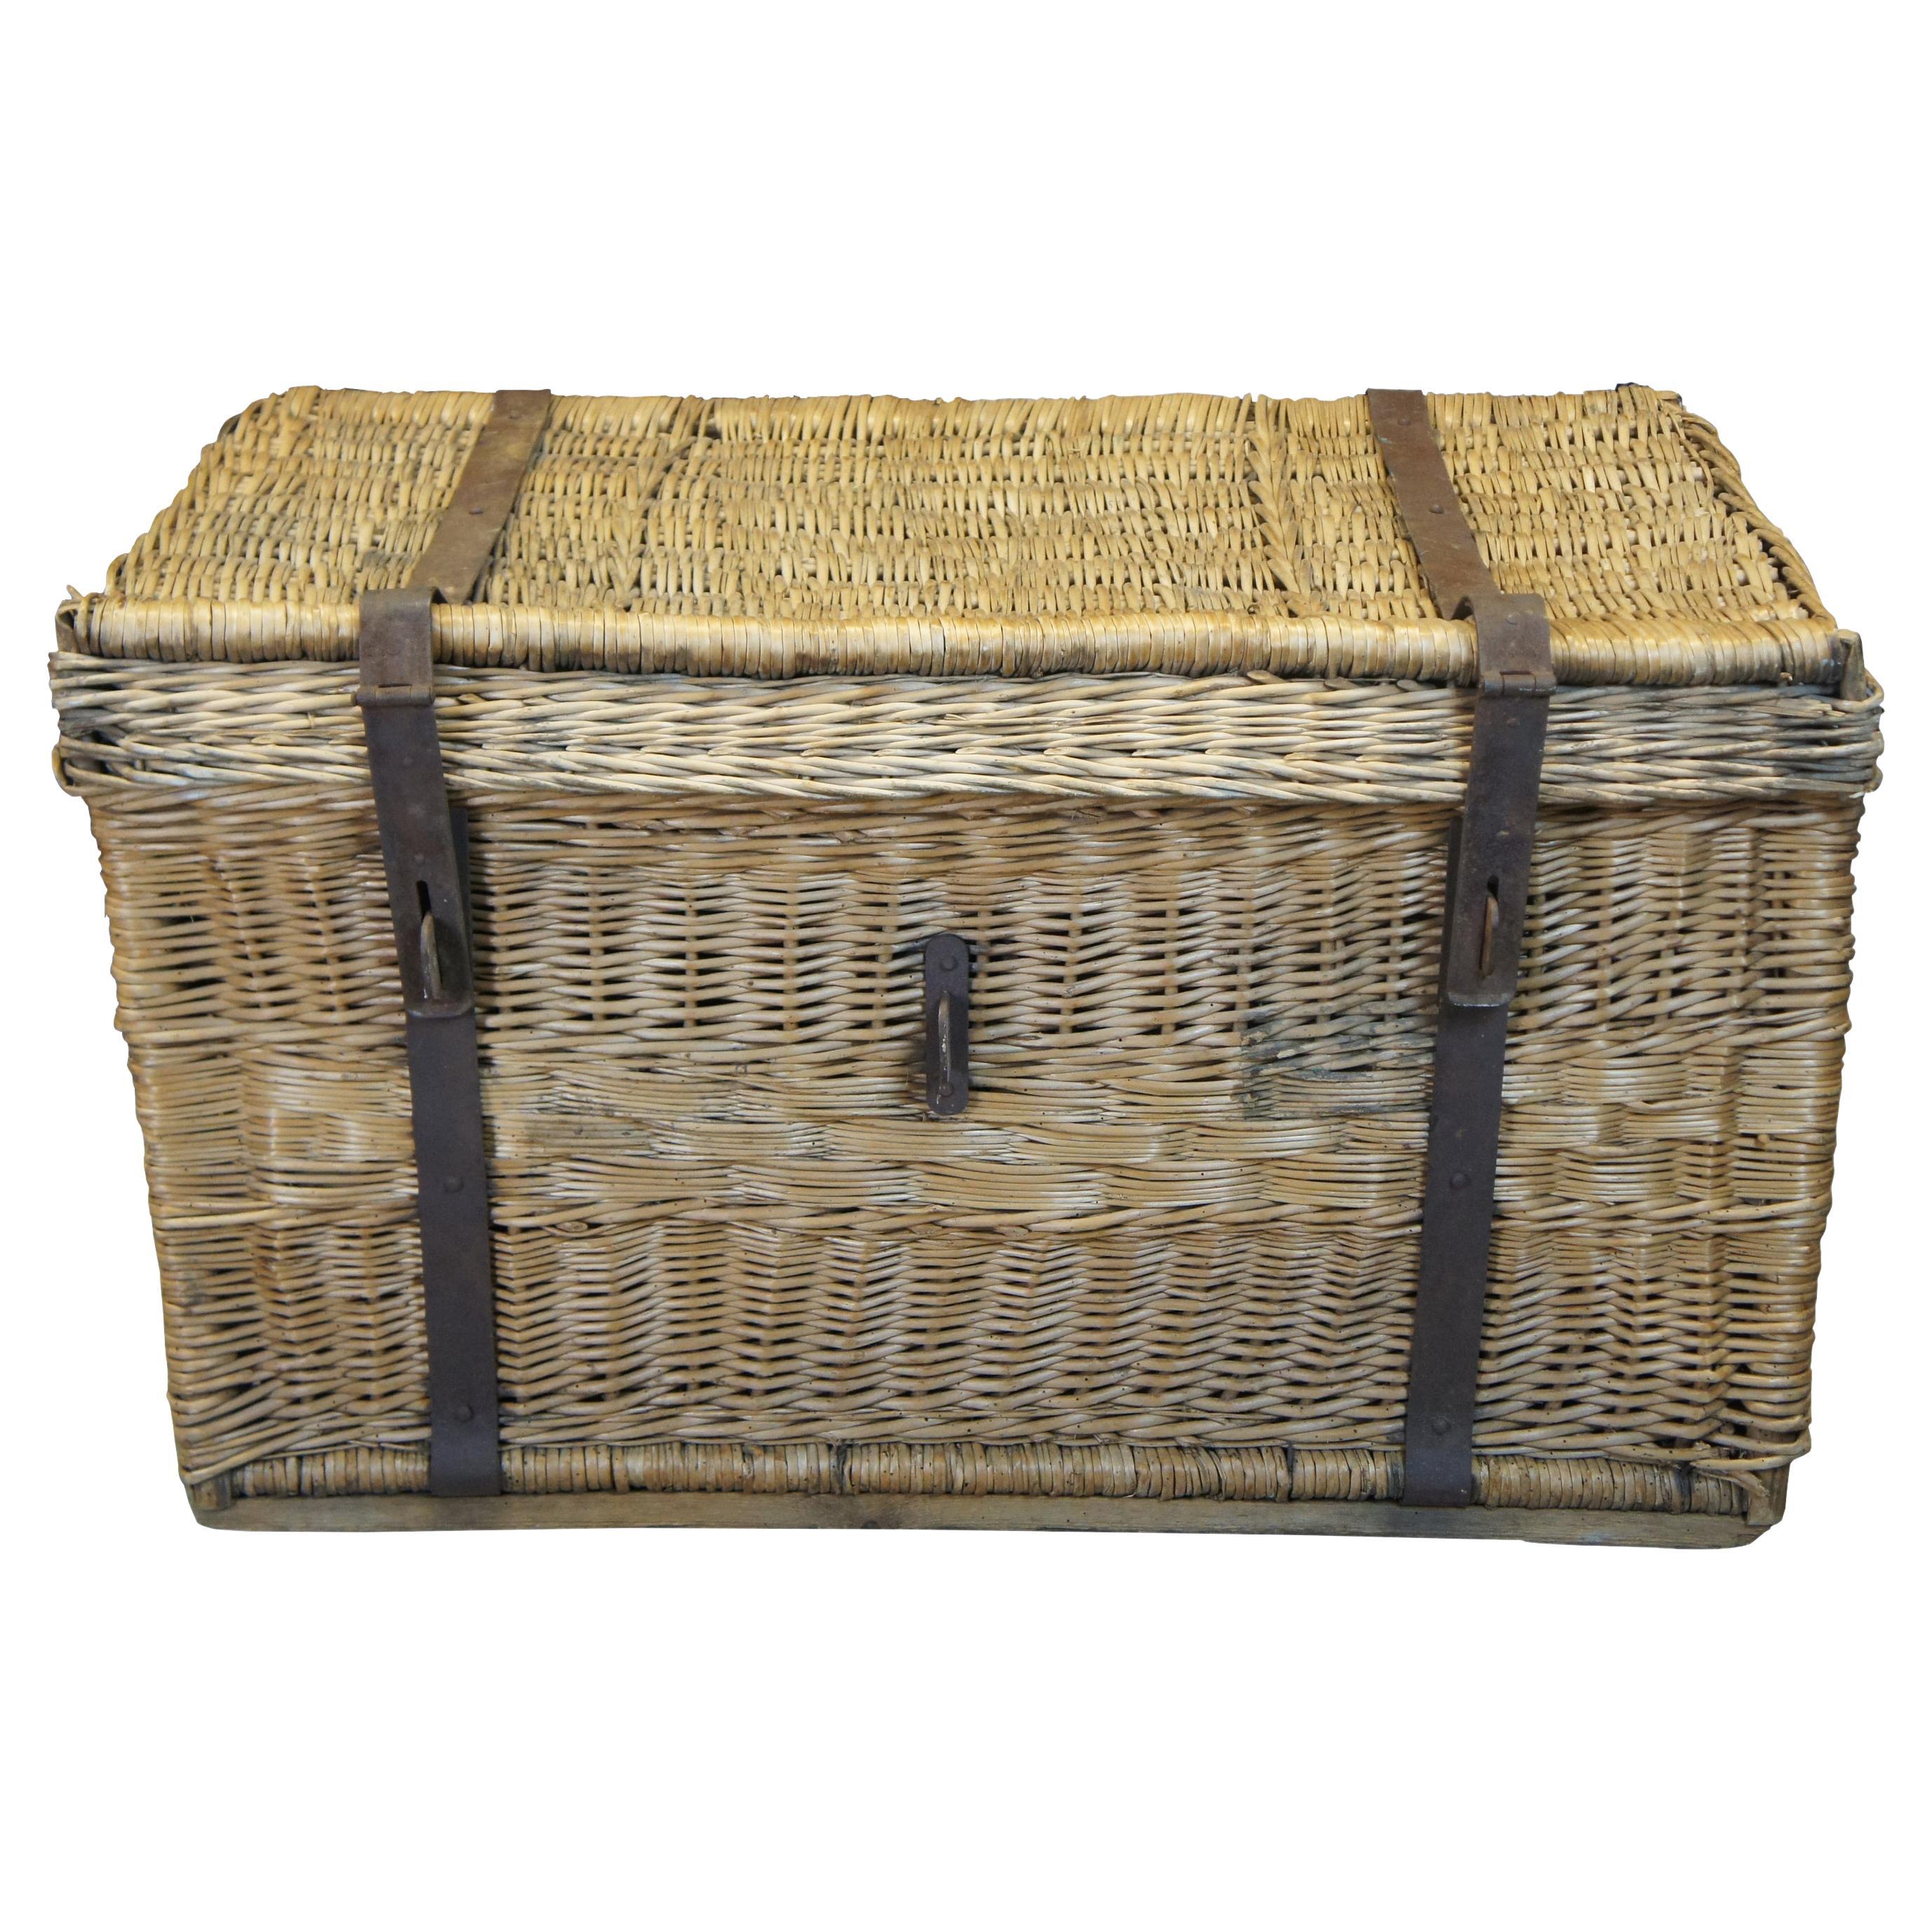 Large Antique European Wicker Ocean Liner Steamer Travel Trunk Champagne Basket